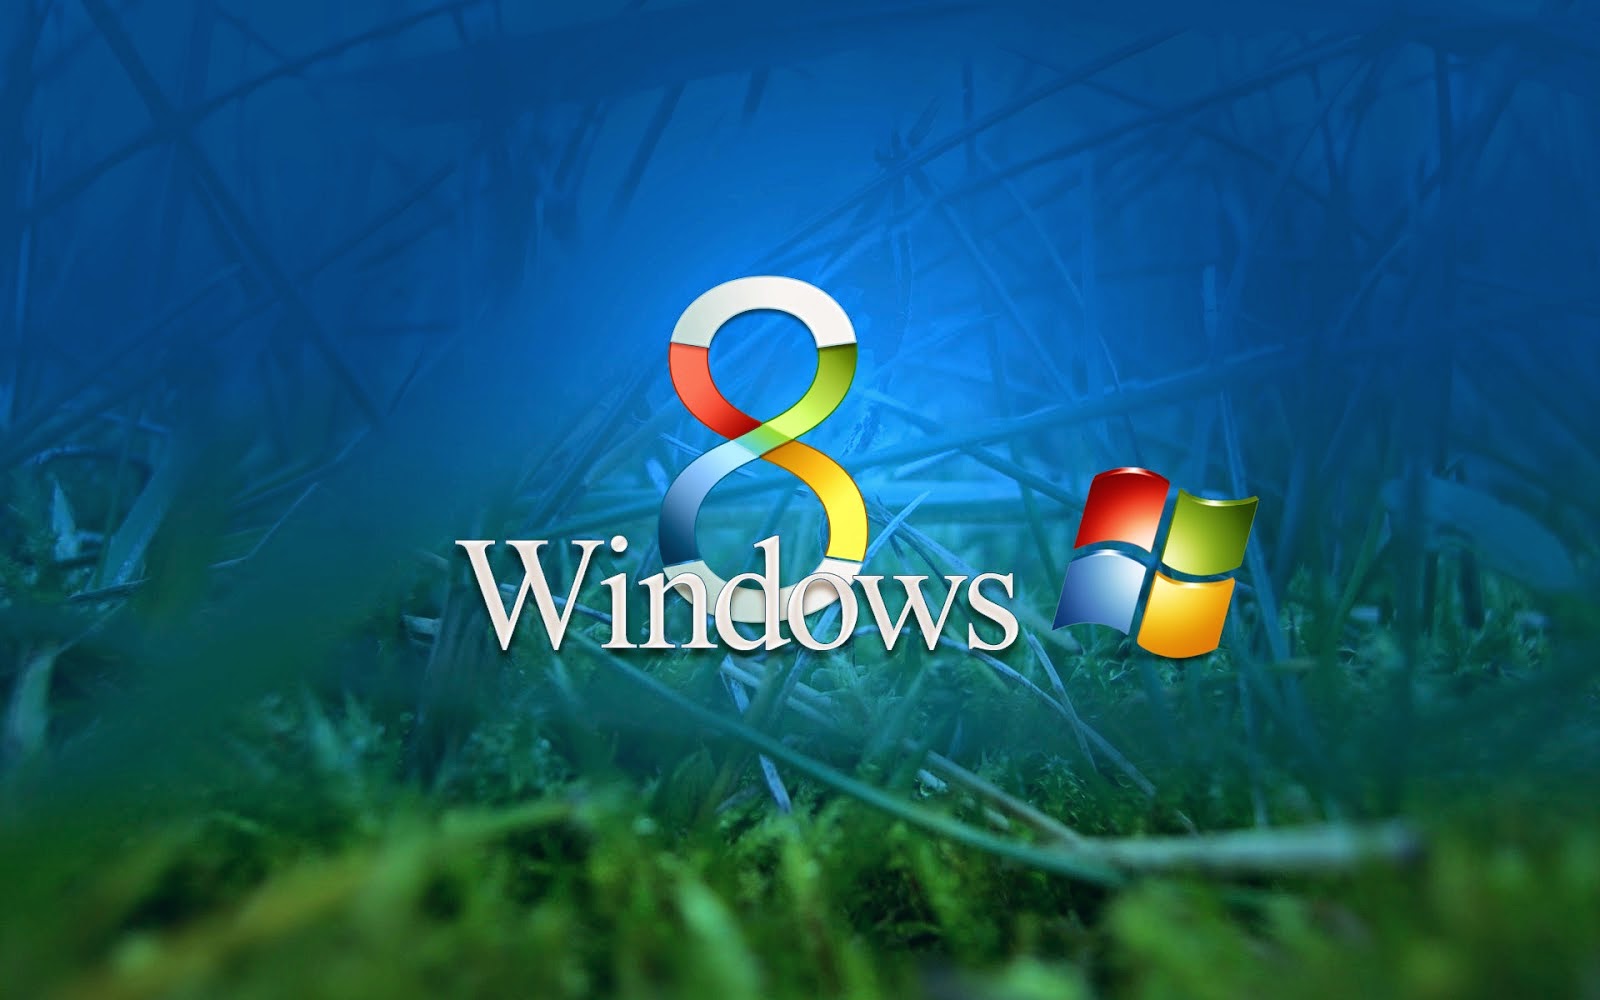 Windows 8 Hd Desktop Wallpaper Free Download For Pc